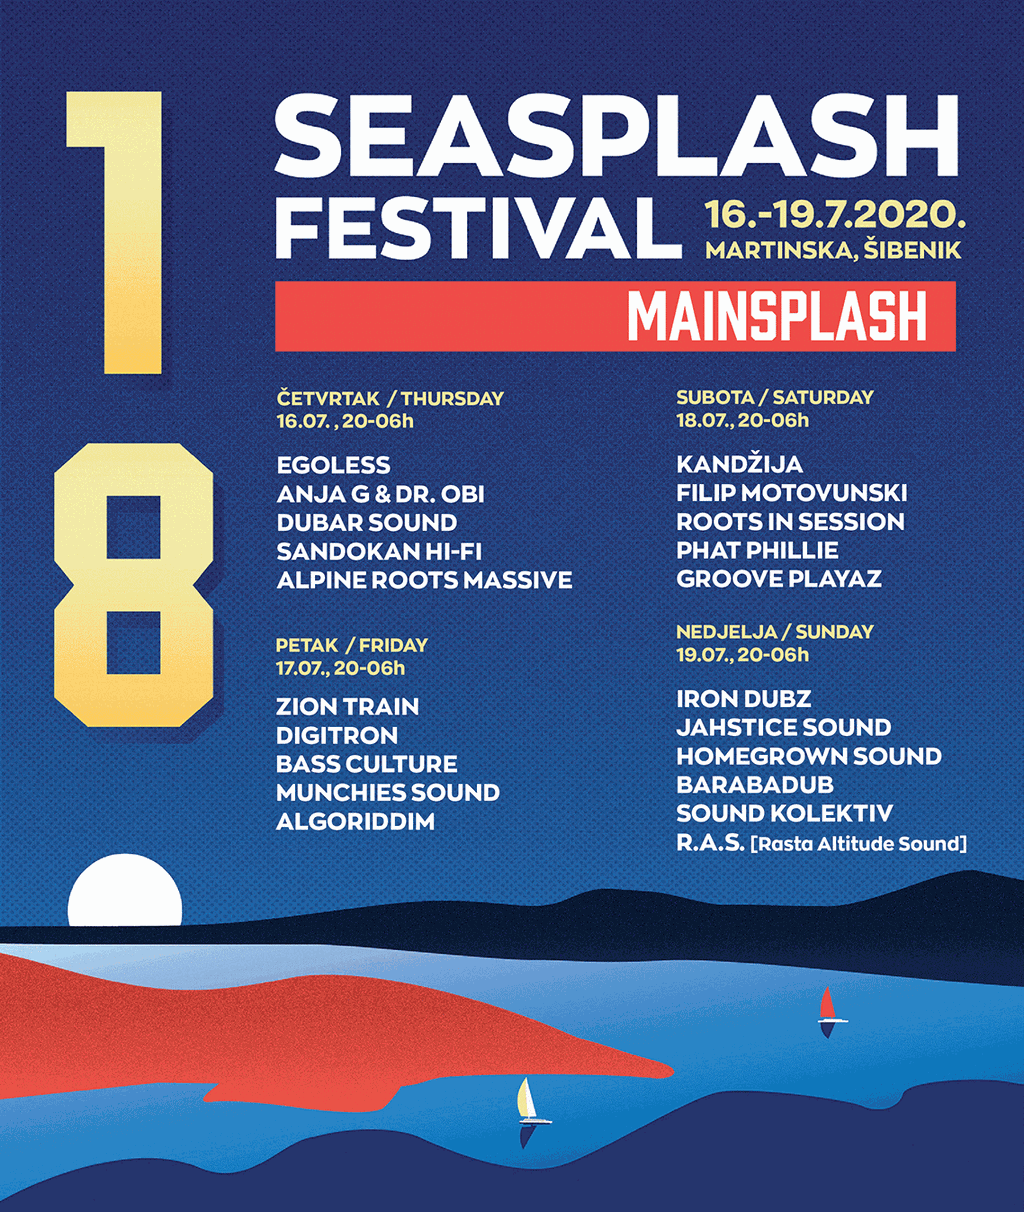 Seasplash festival - Mainsplash